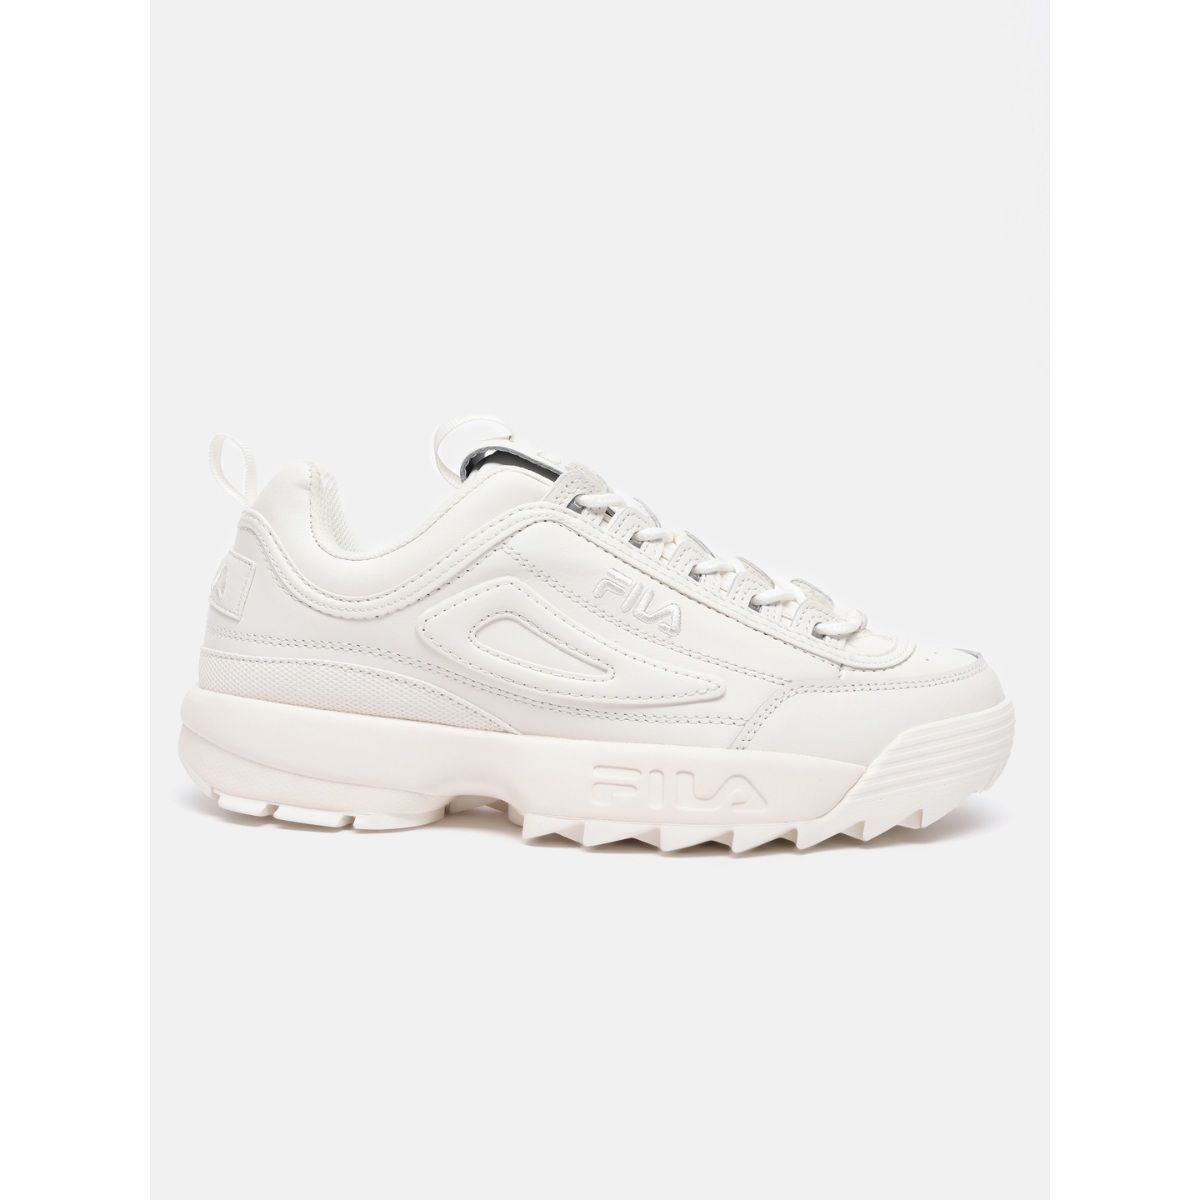 Nike Air Jordan Flight 5 Premium White Size 13 Sneakers 881434-111 | eBay